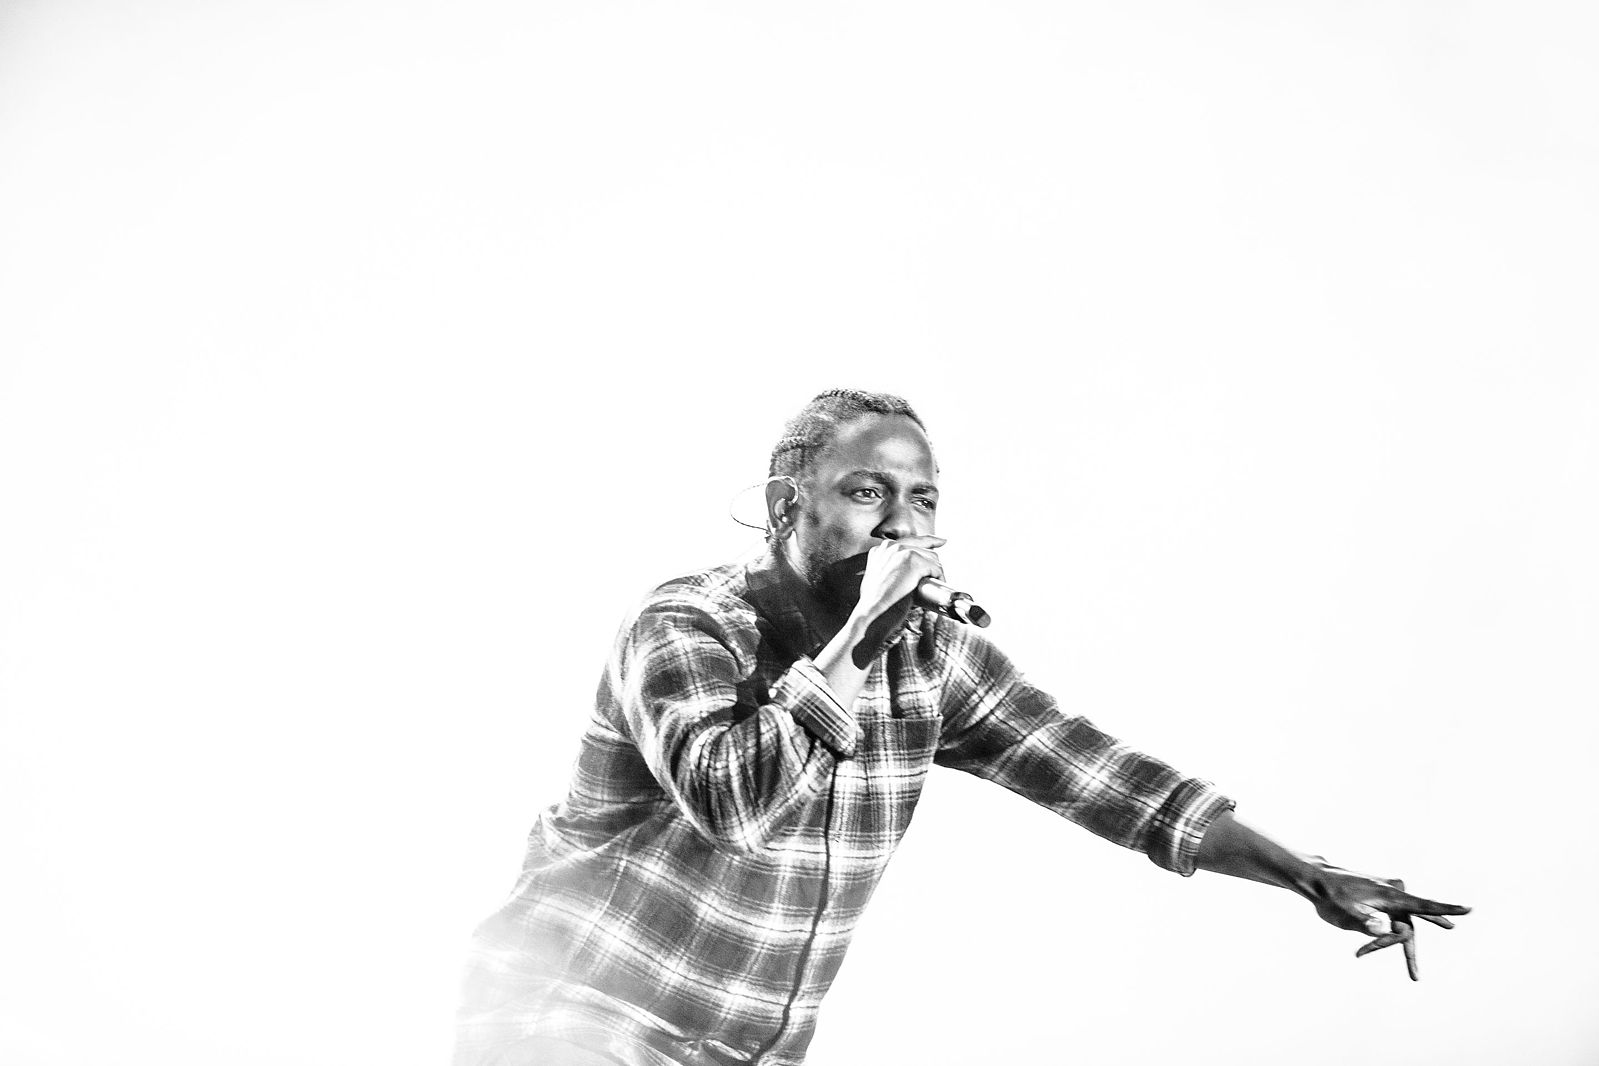 The 50 Greatest Kendrick Lamar Songs